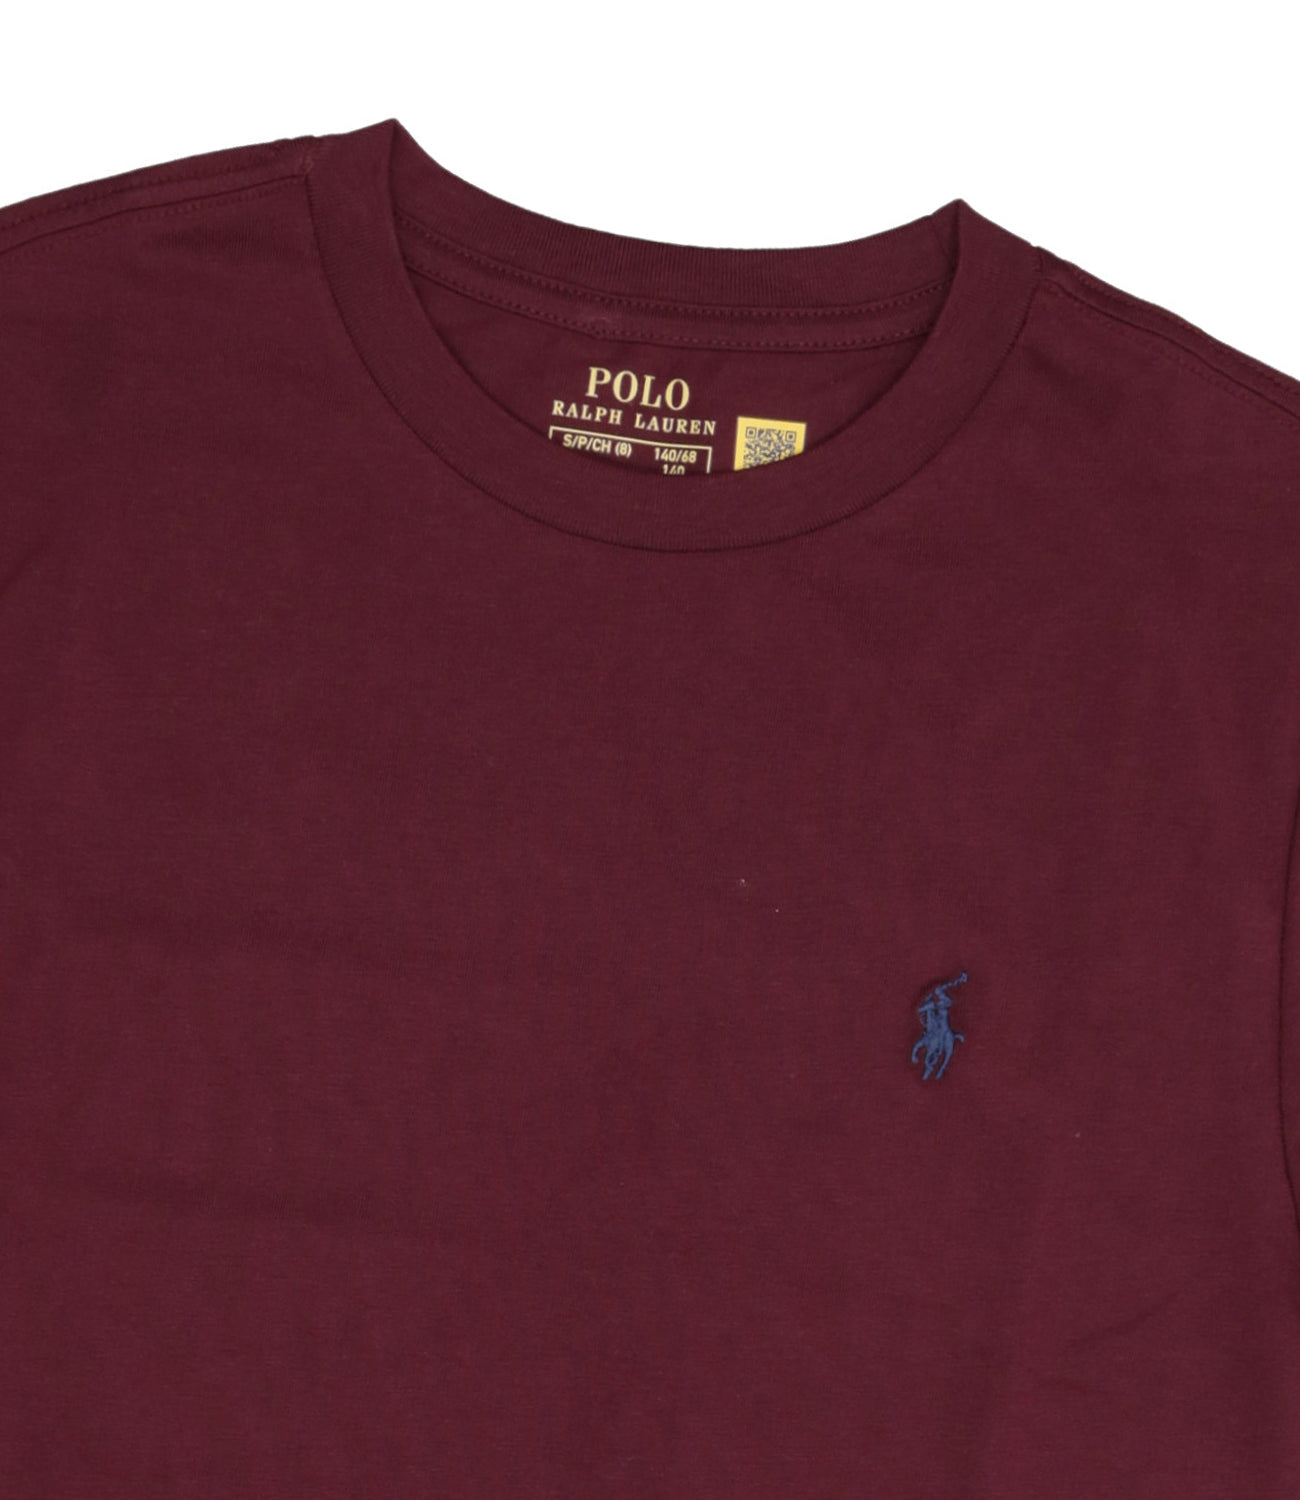 Ralph Lauren Childrenswear |T-Shirt Bordeaux